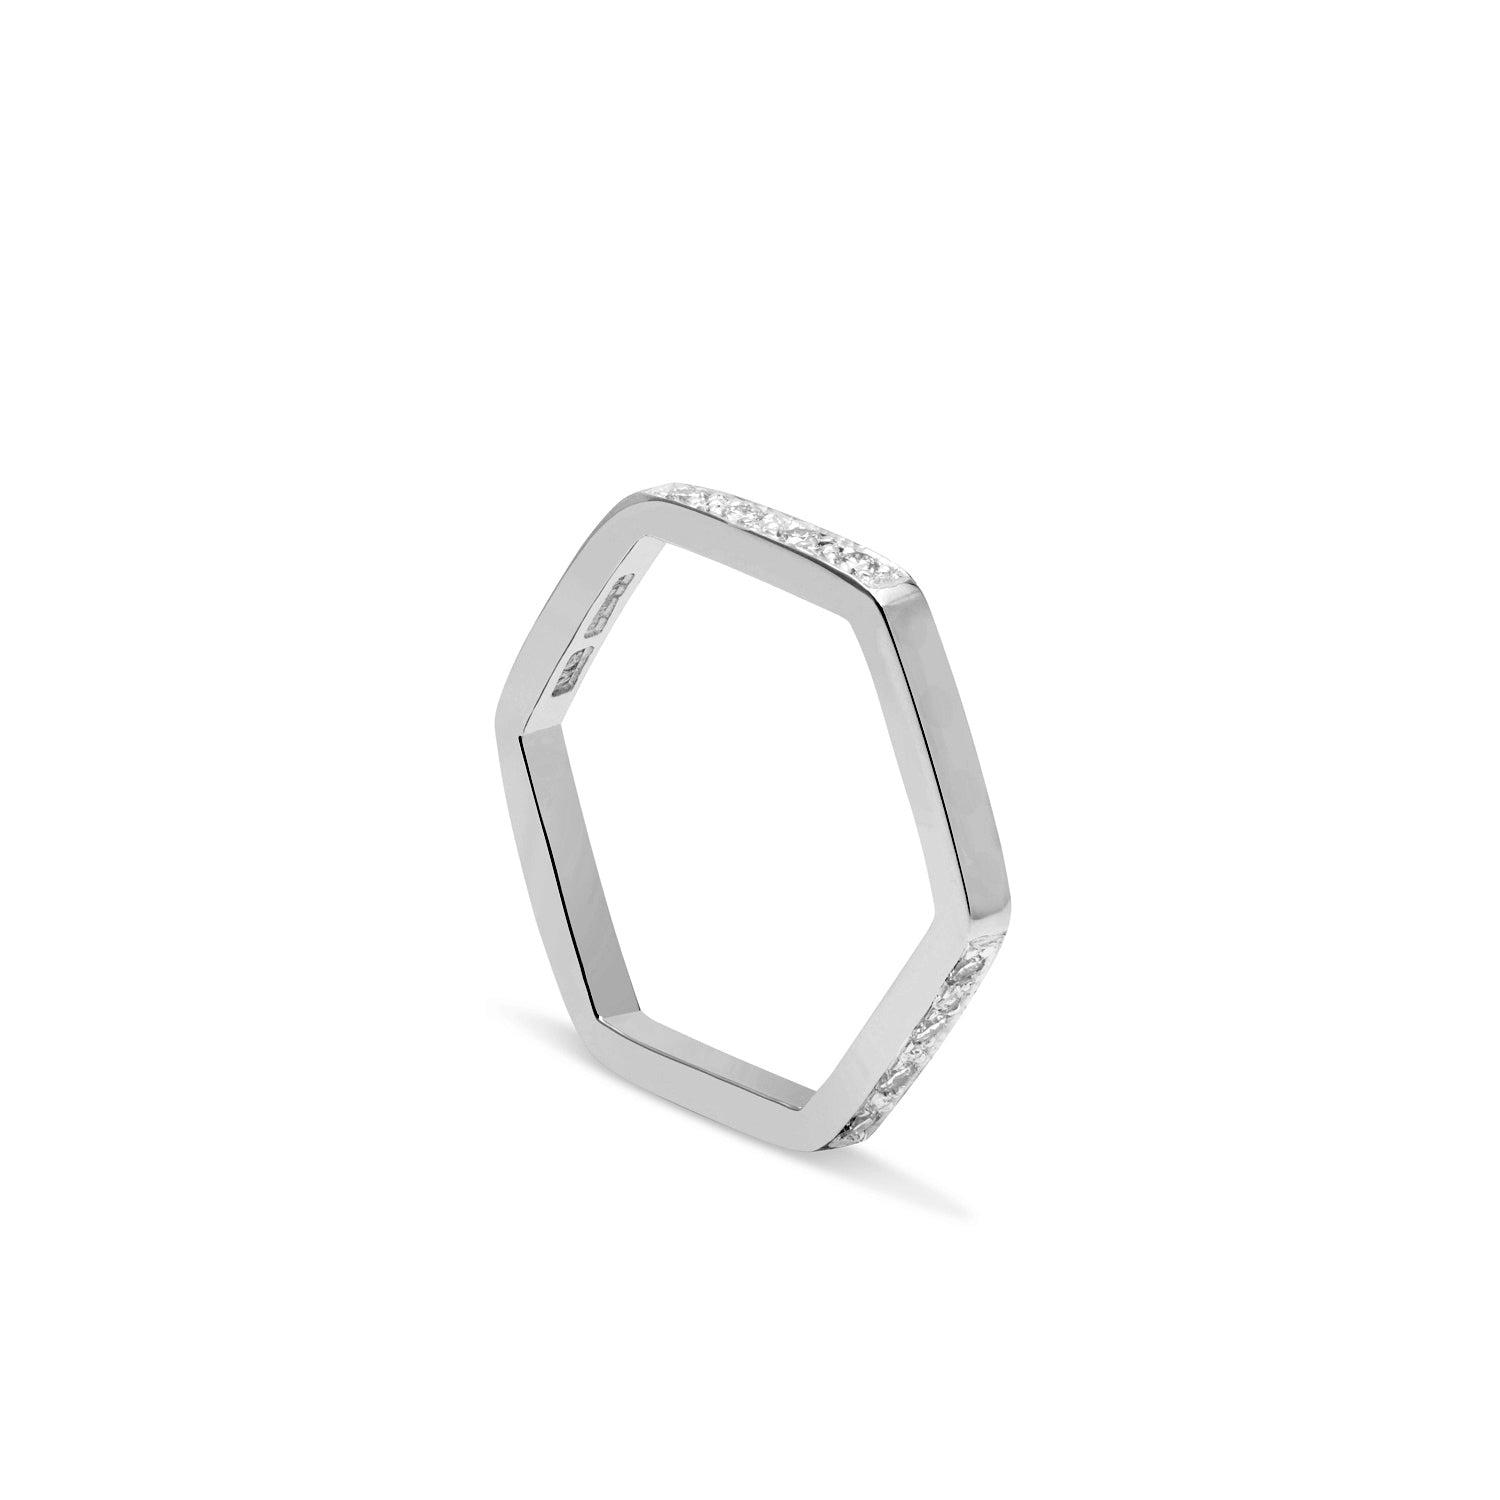 Hexagon Ring with Diamonds / 2 Sides - 18k White Gold